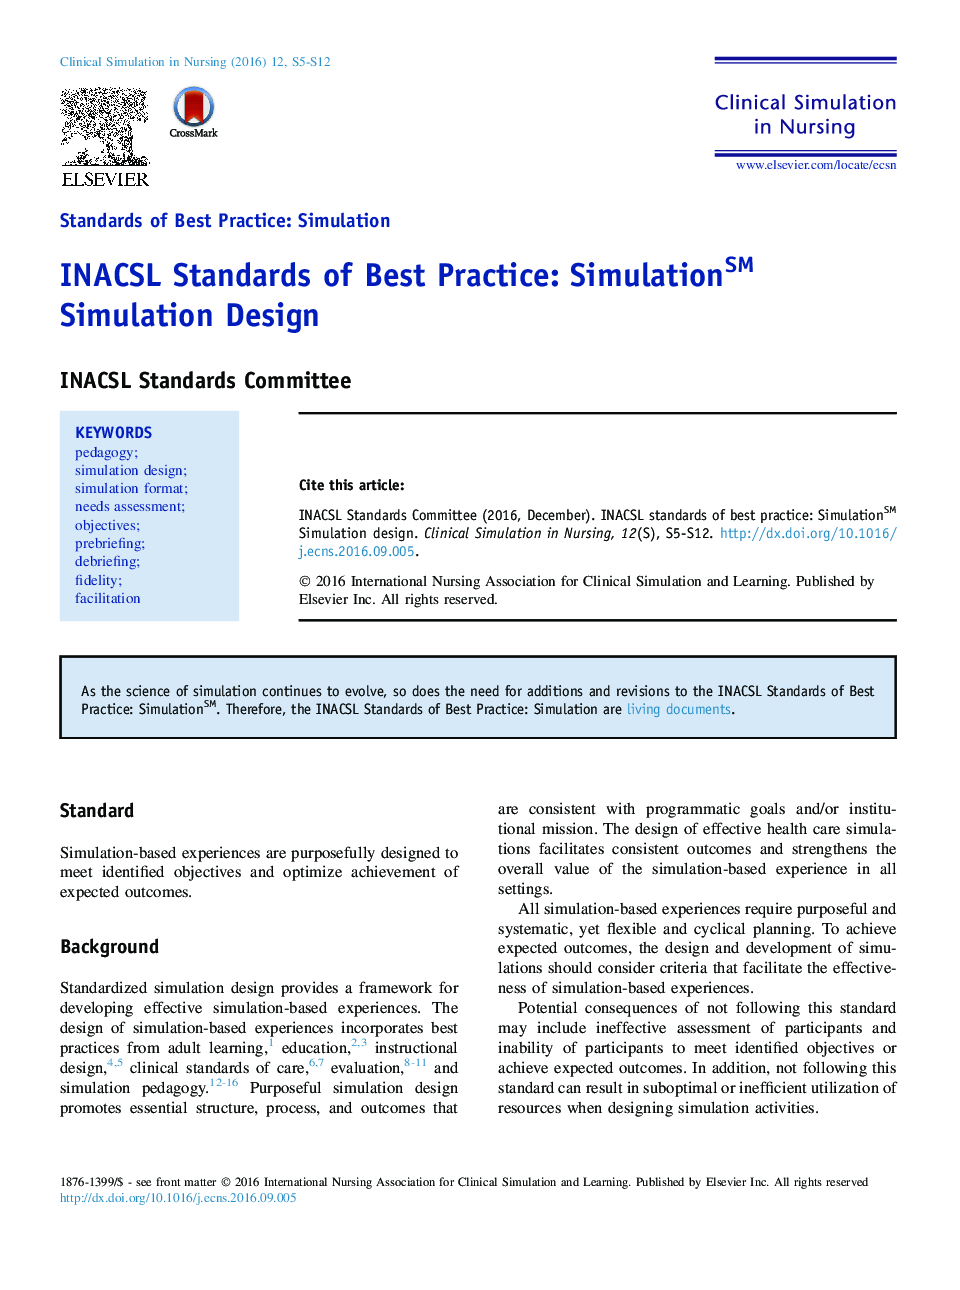 INACSL Standards of Best Practice: SimulationSM Simulation Design